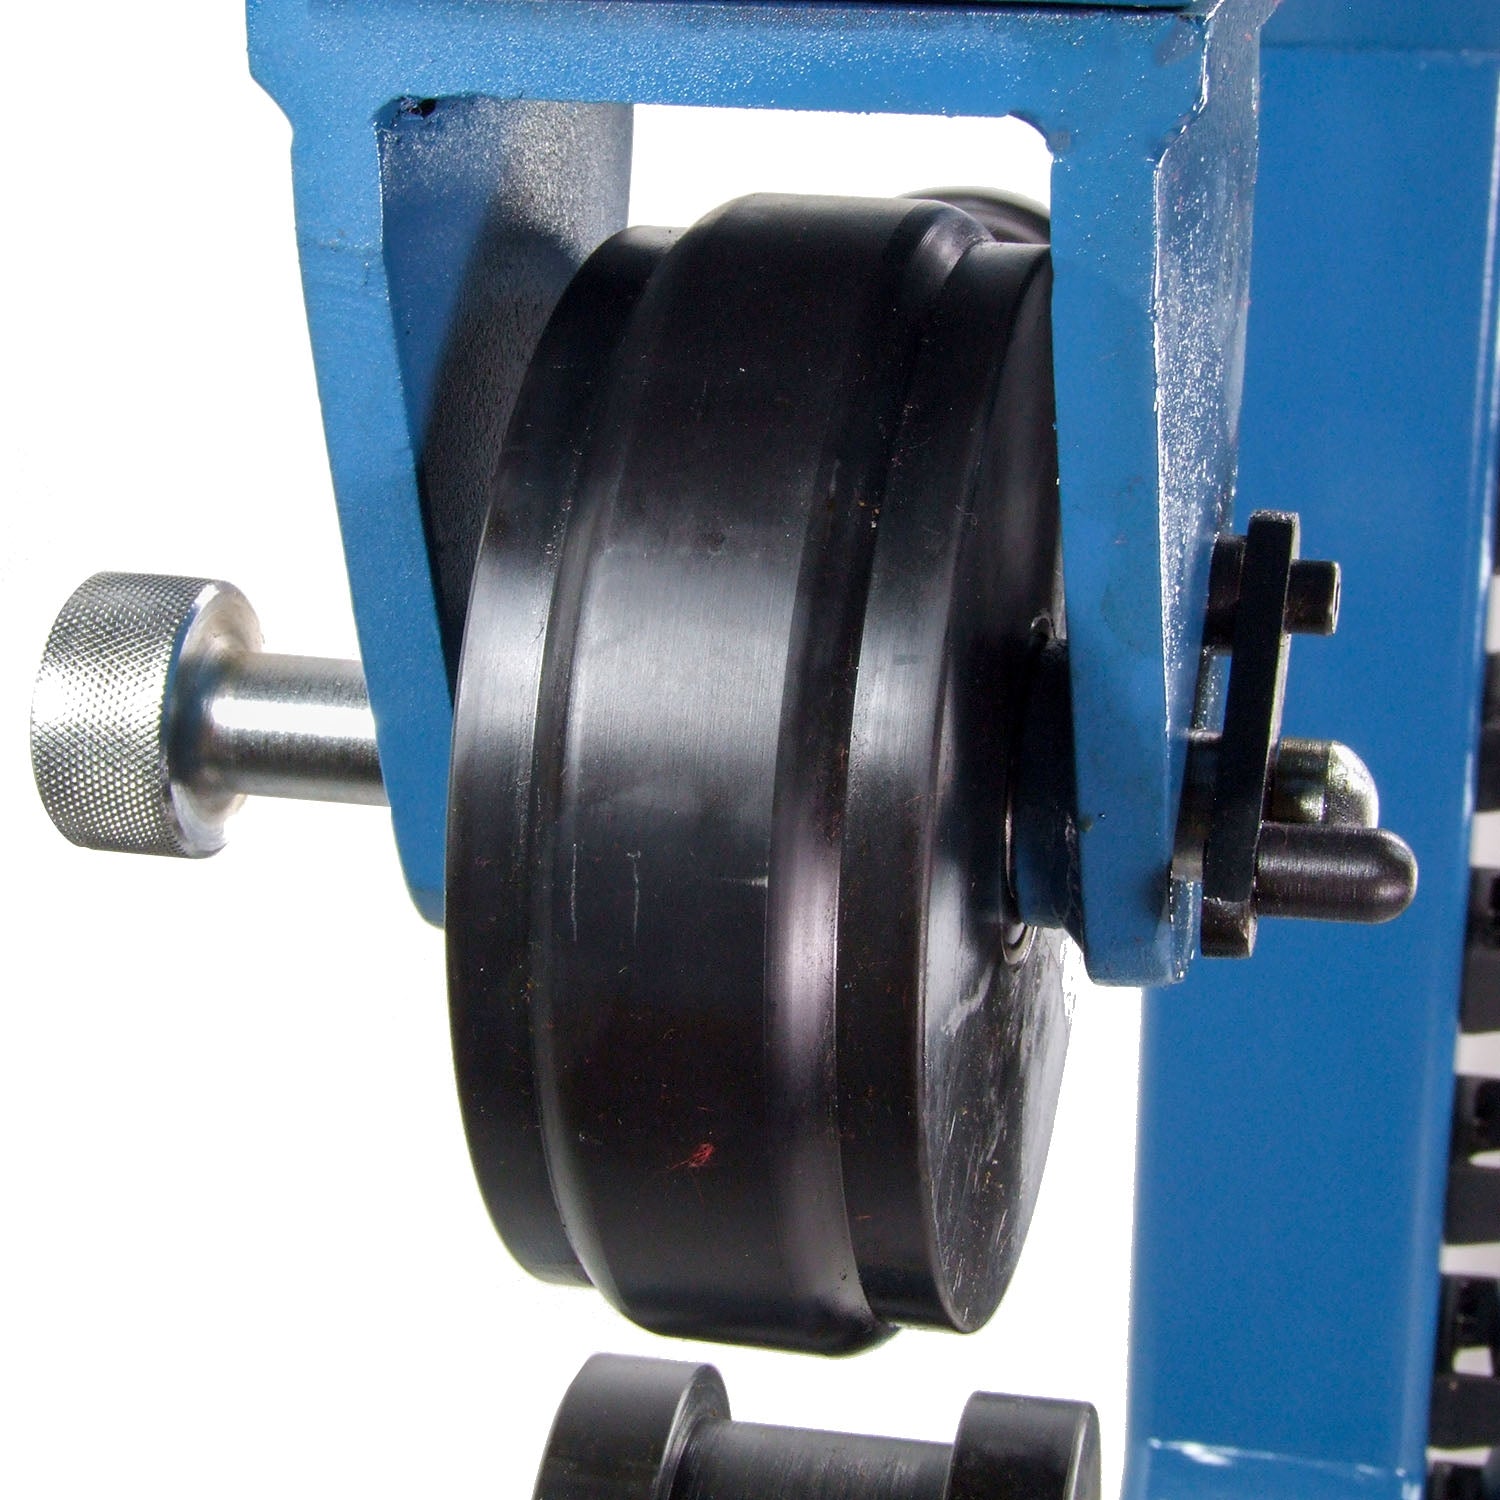 Baileigh EW-40 Manually Operated English Wheel, 16 Gauge Mild Steel Capacity